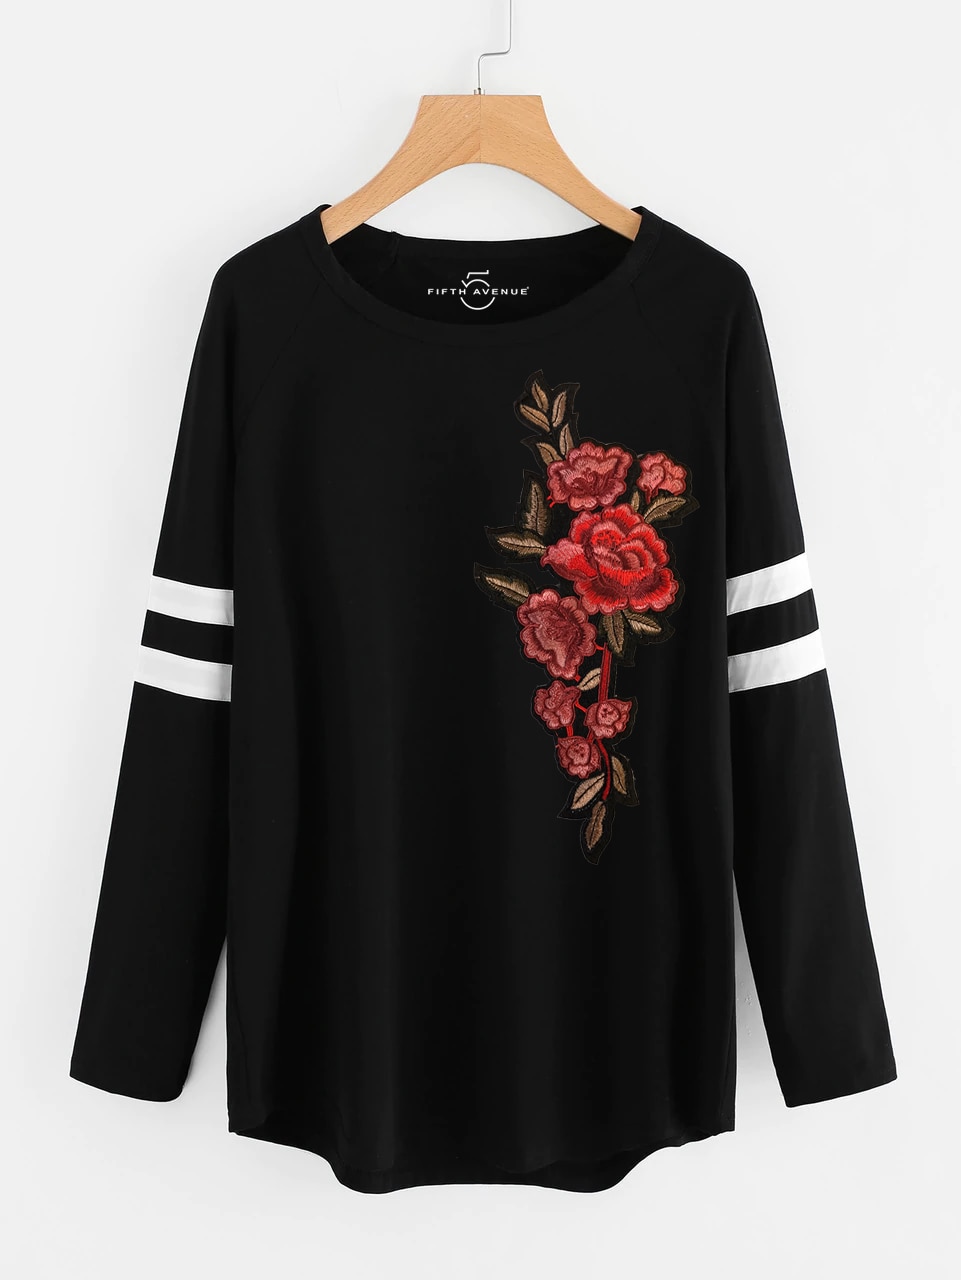 /2019/06/fifth-avenue-womens-naza-full-sleeves-embroidered-ripzt43-t-shirt-black-image1.jpeg